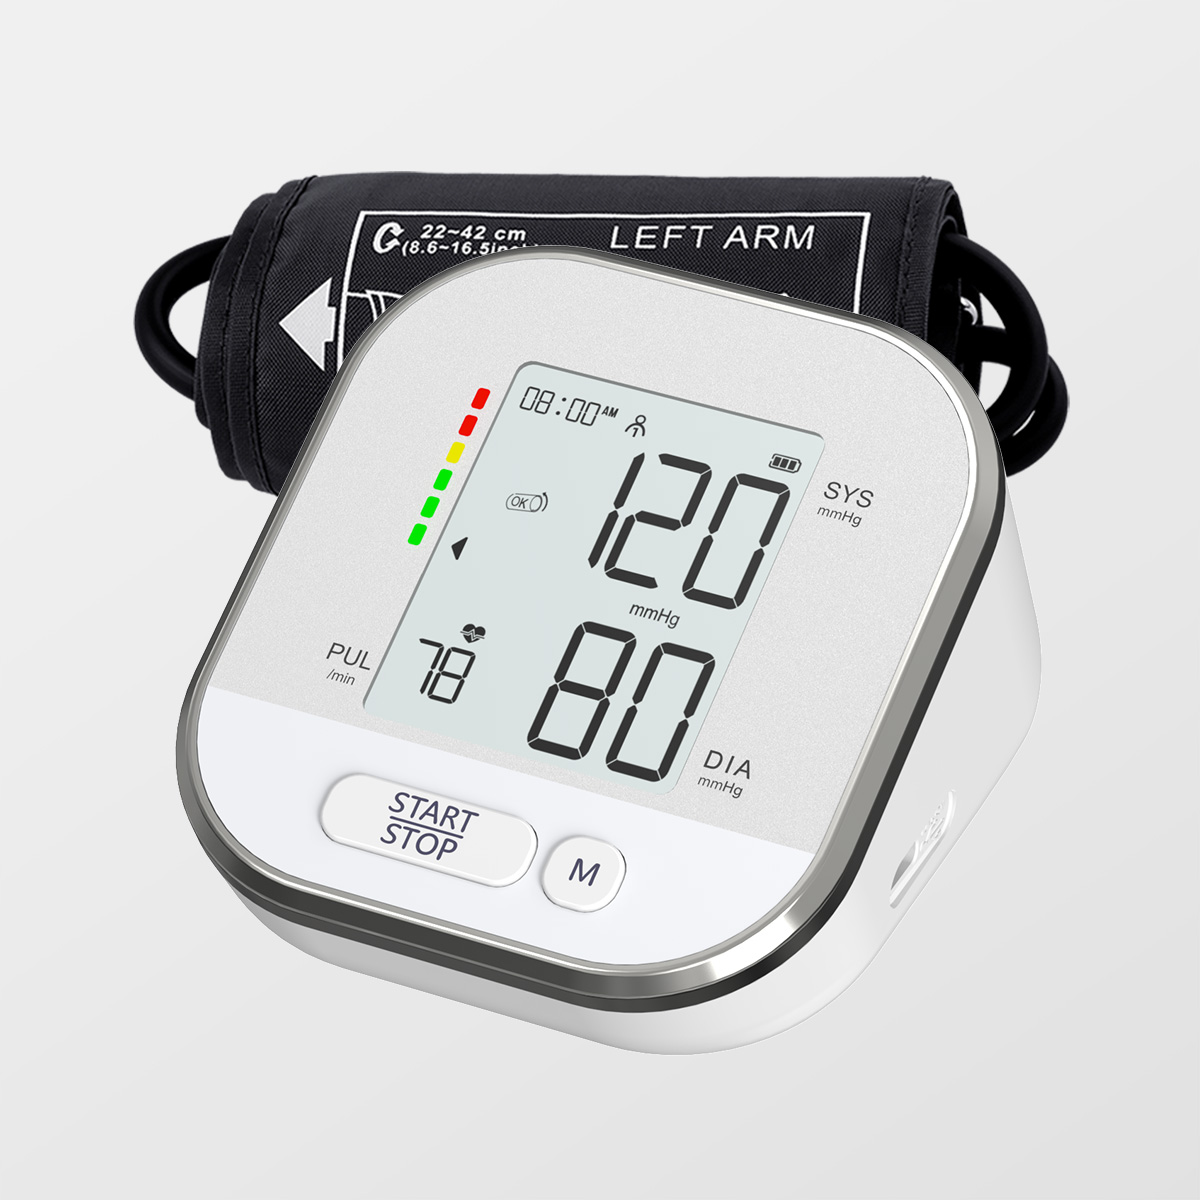 Upper Arm BP Meter Digital Blood Pressure Monitor Bluetooth MDR CE Manifattur approvat